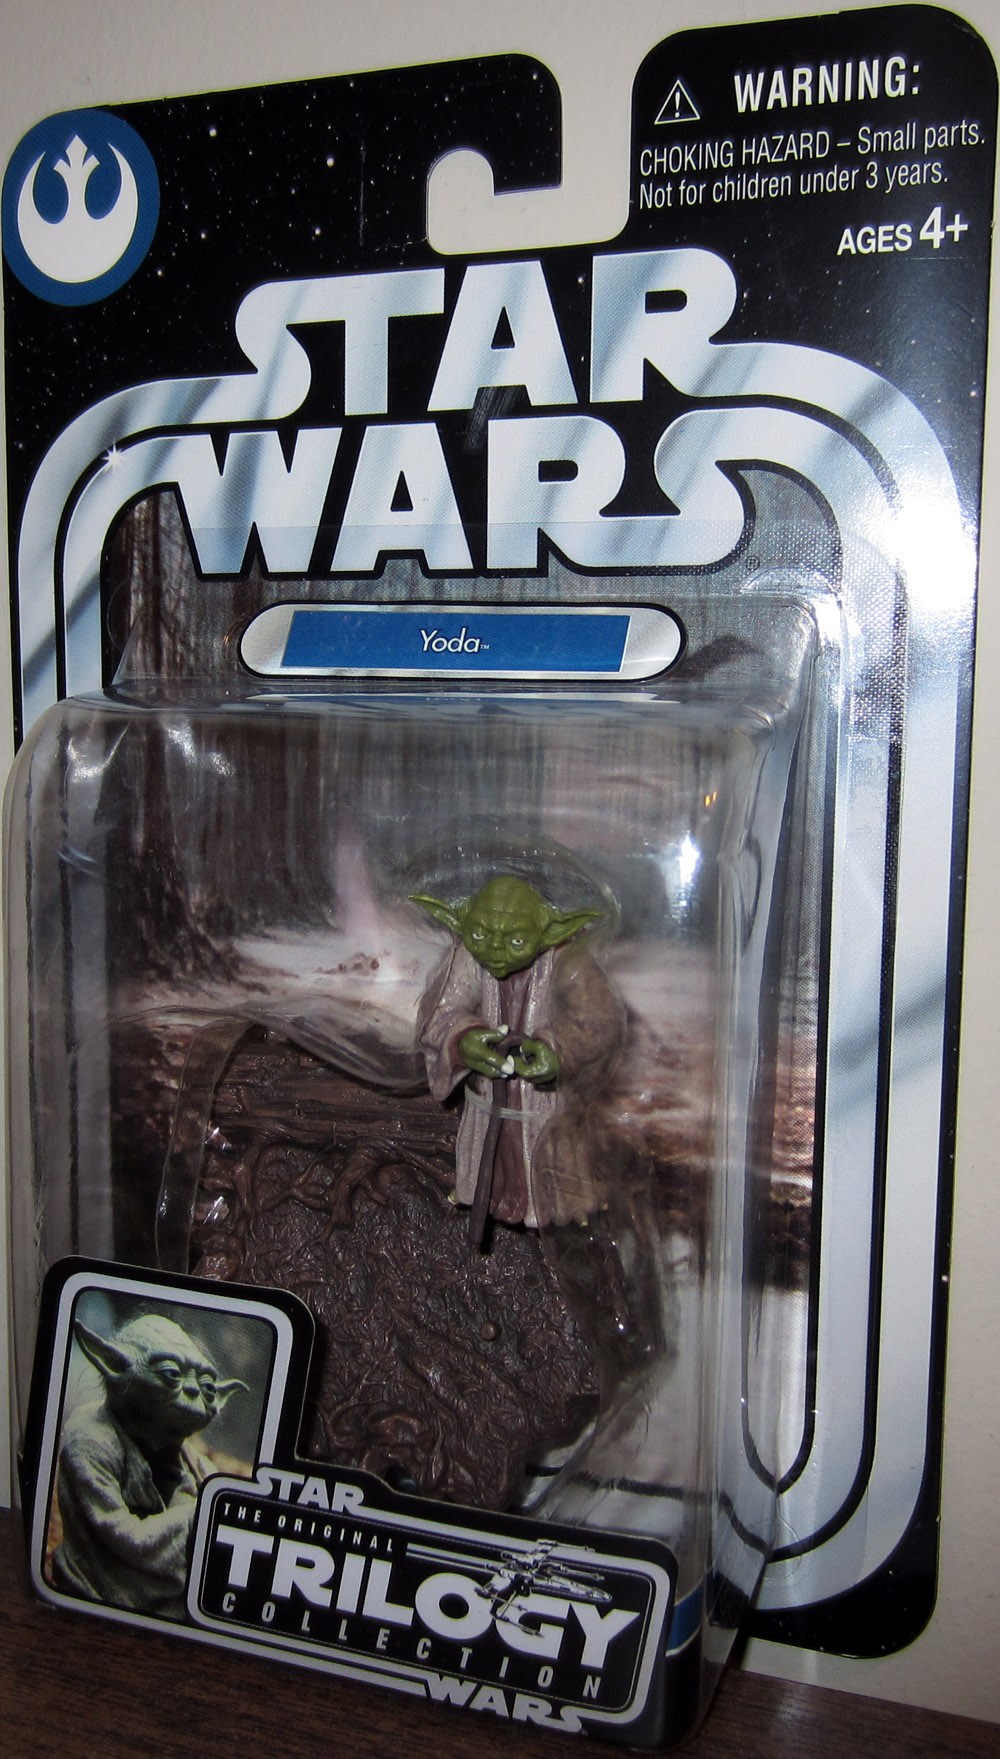 Yoda Original Trilogy Collection 02 Star Wars action figure - YoDa(otc)